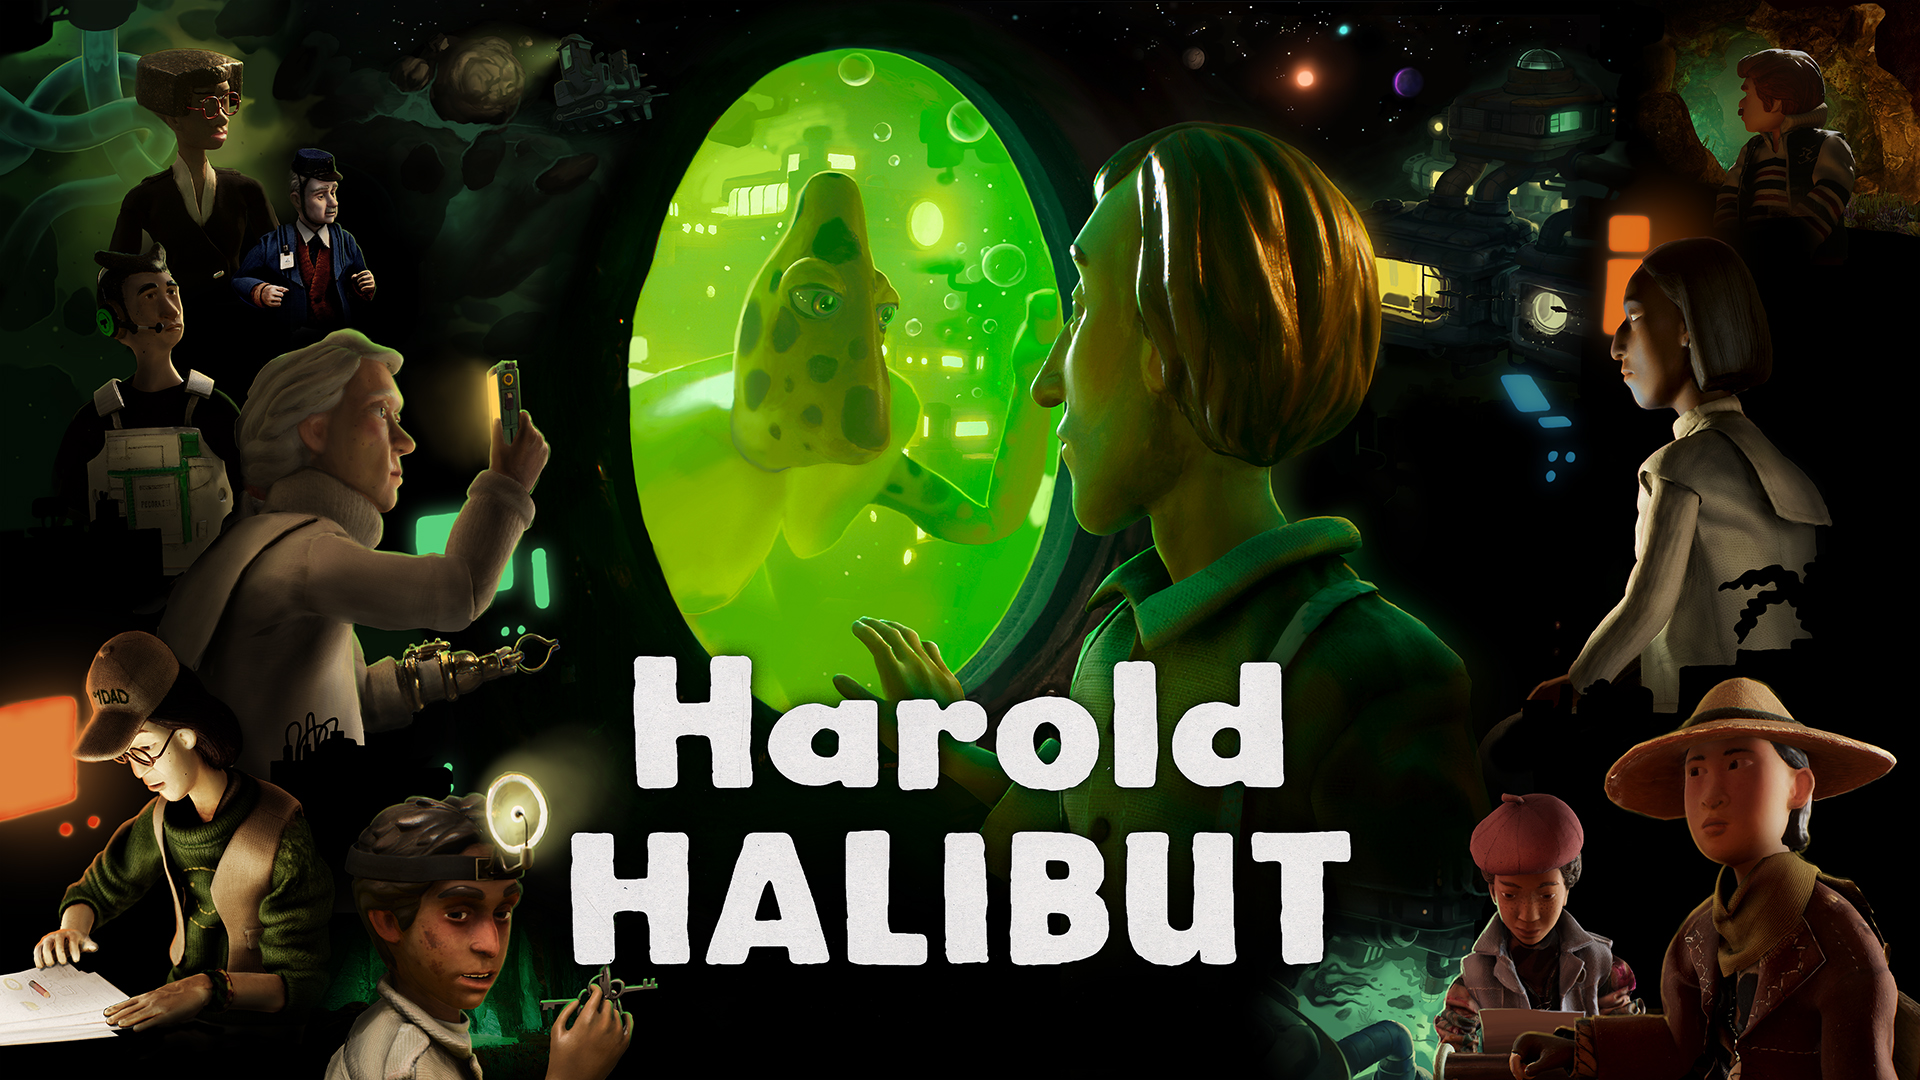 The key art for Harold Halibut.